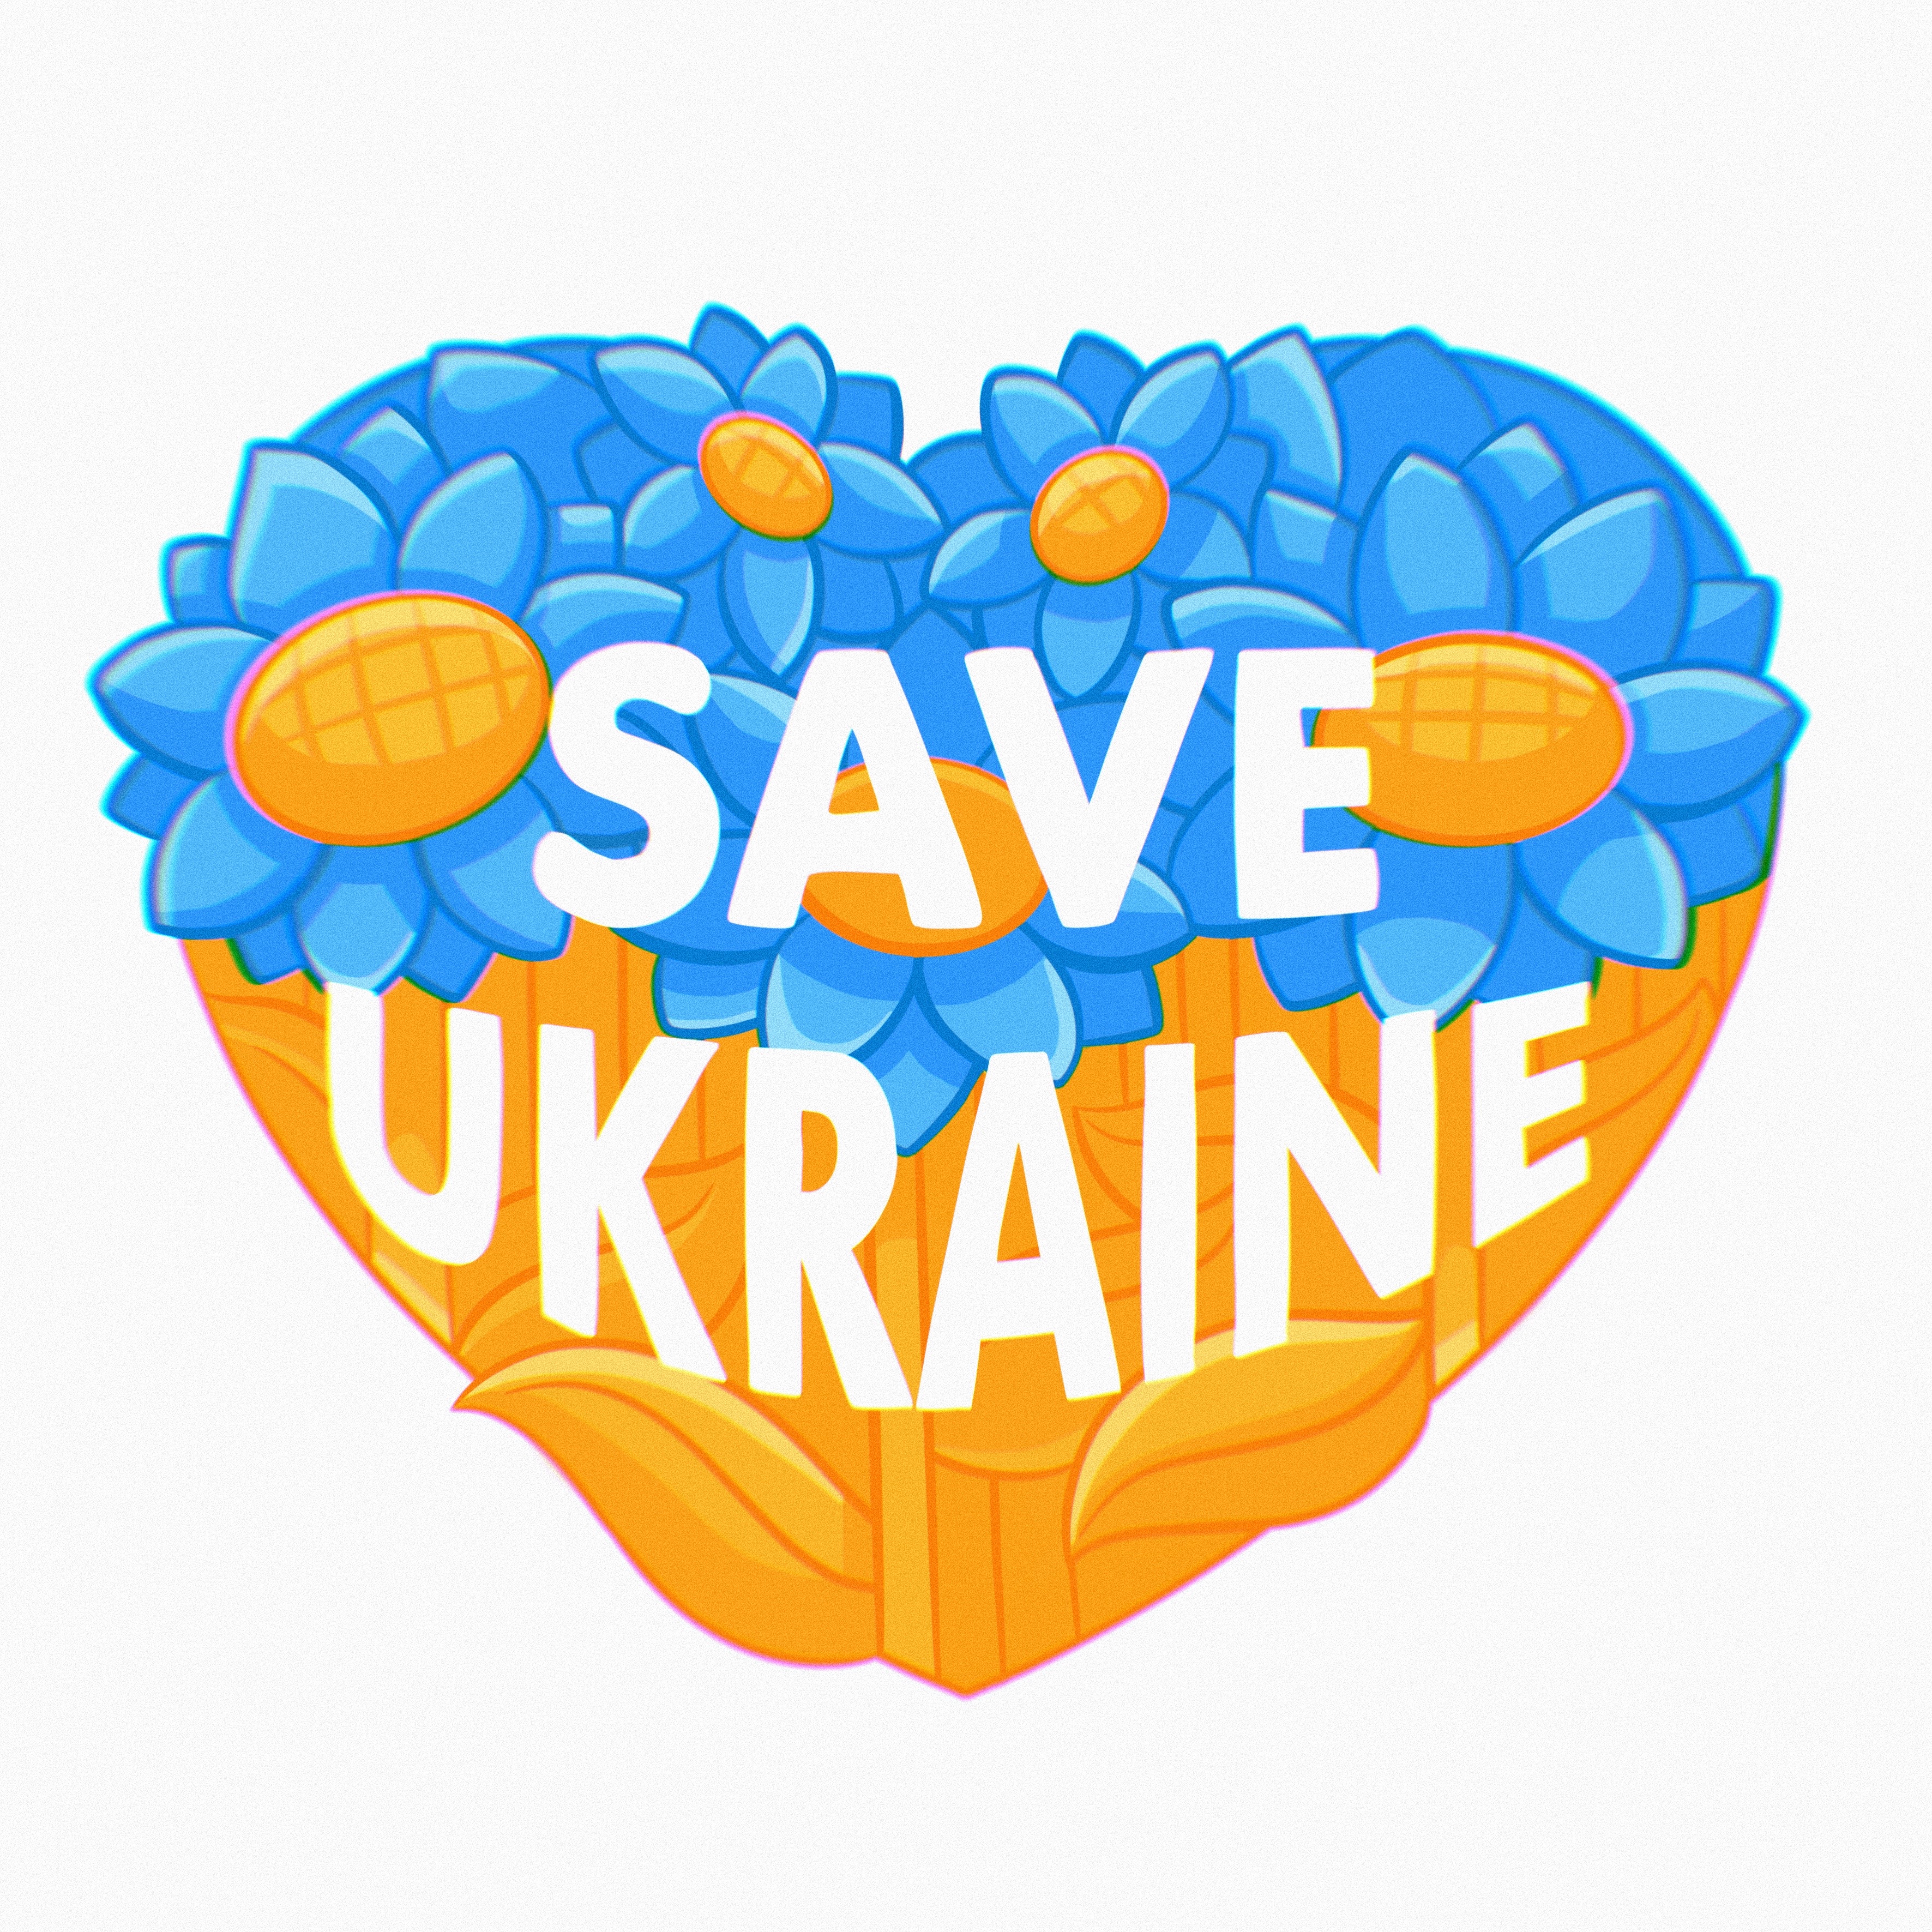 "Save Ukraine" #018: The Sunflowers